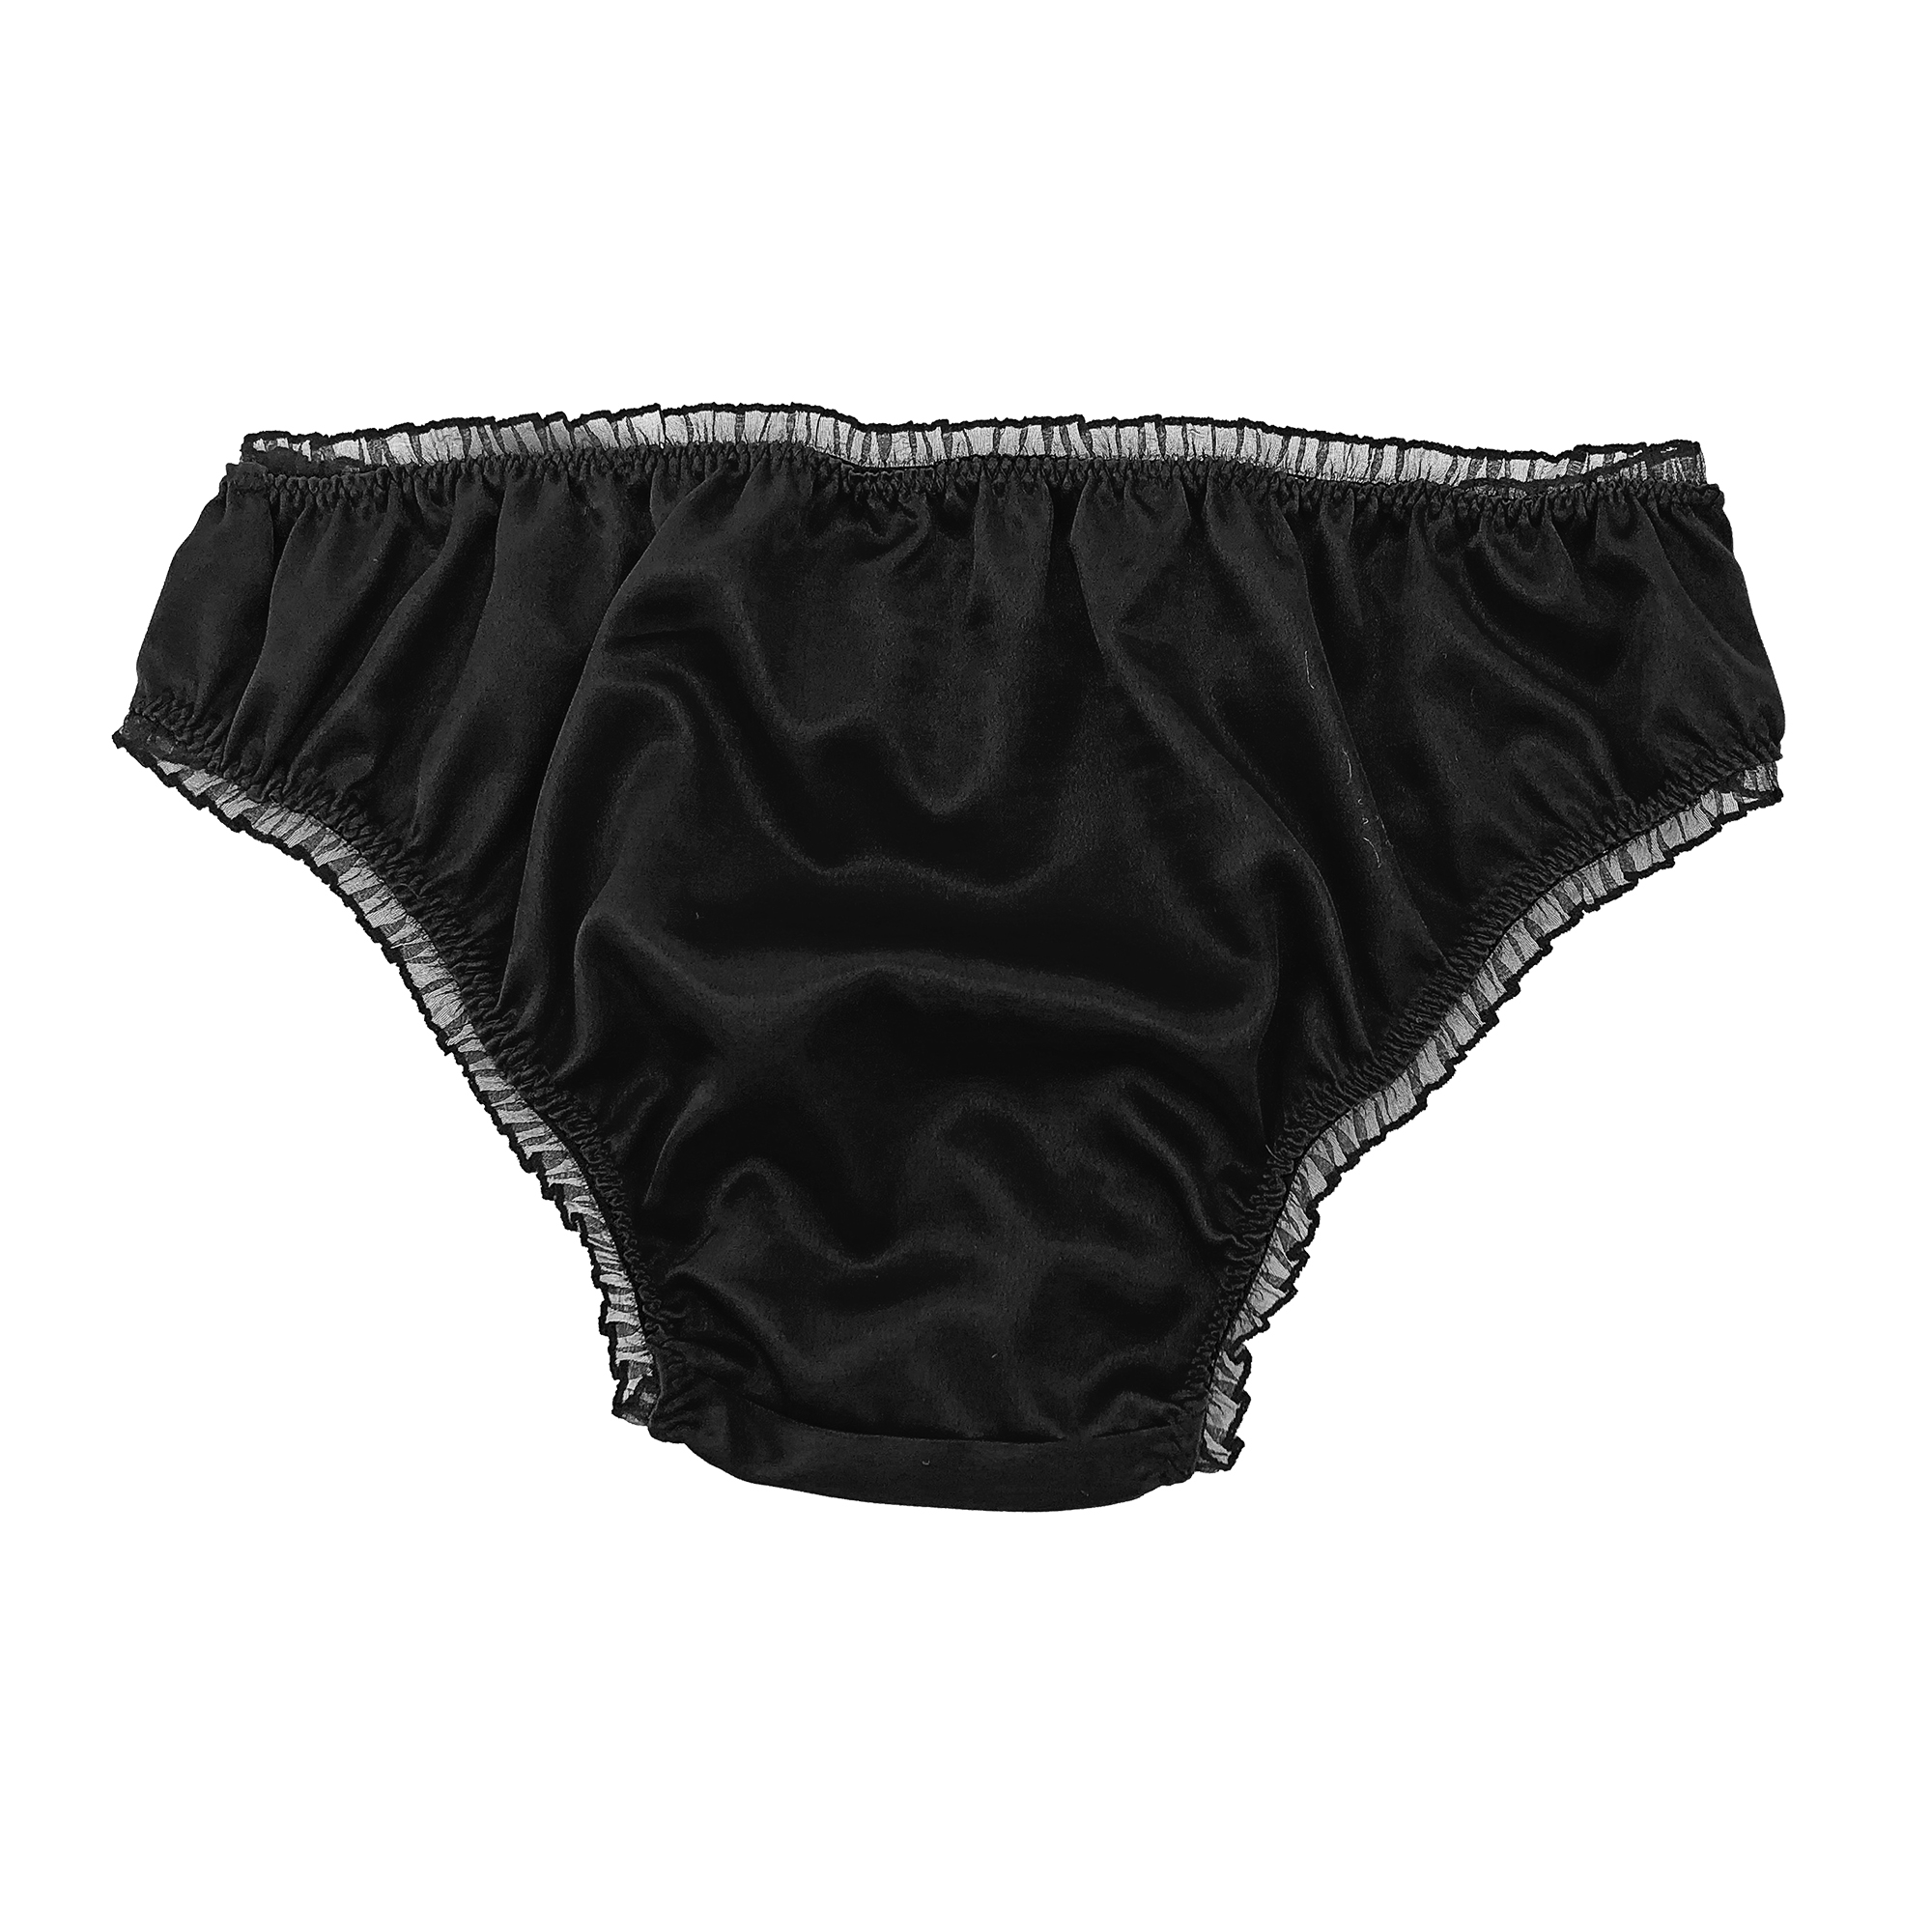 Satin Frilly Sissy Ruffled Panties Bikini Knicker Underwear Briefs ...